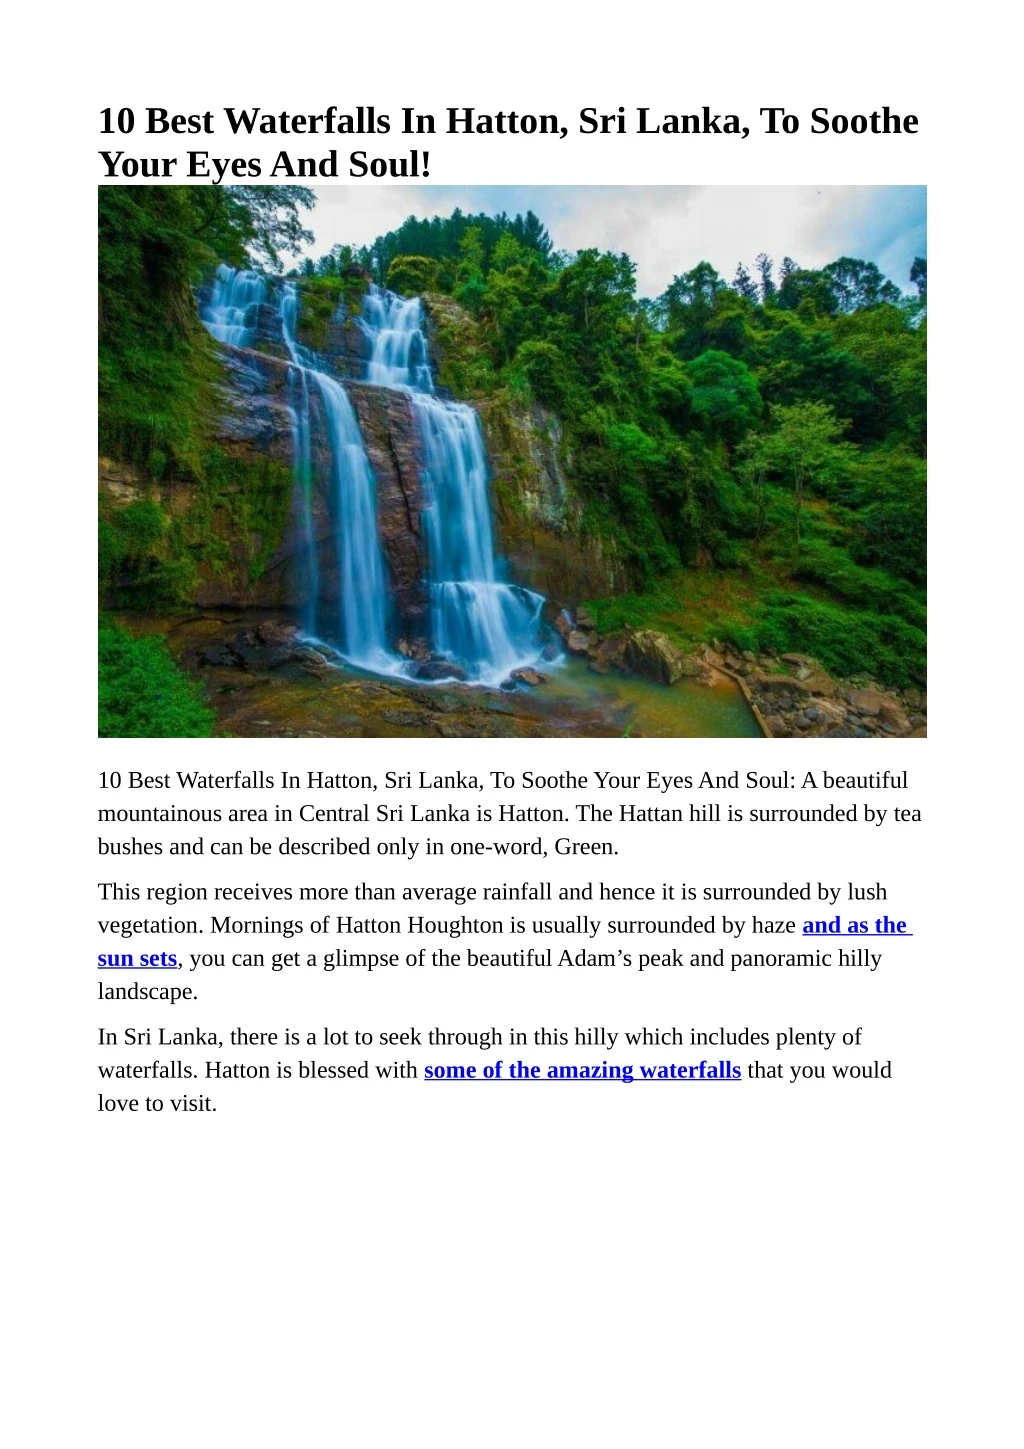 10 best waterfalls in hatton sri lanka to soothe